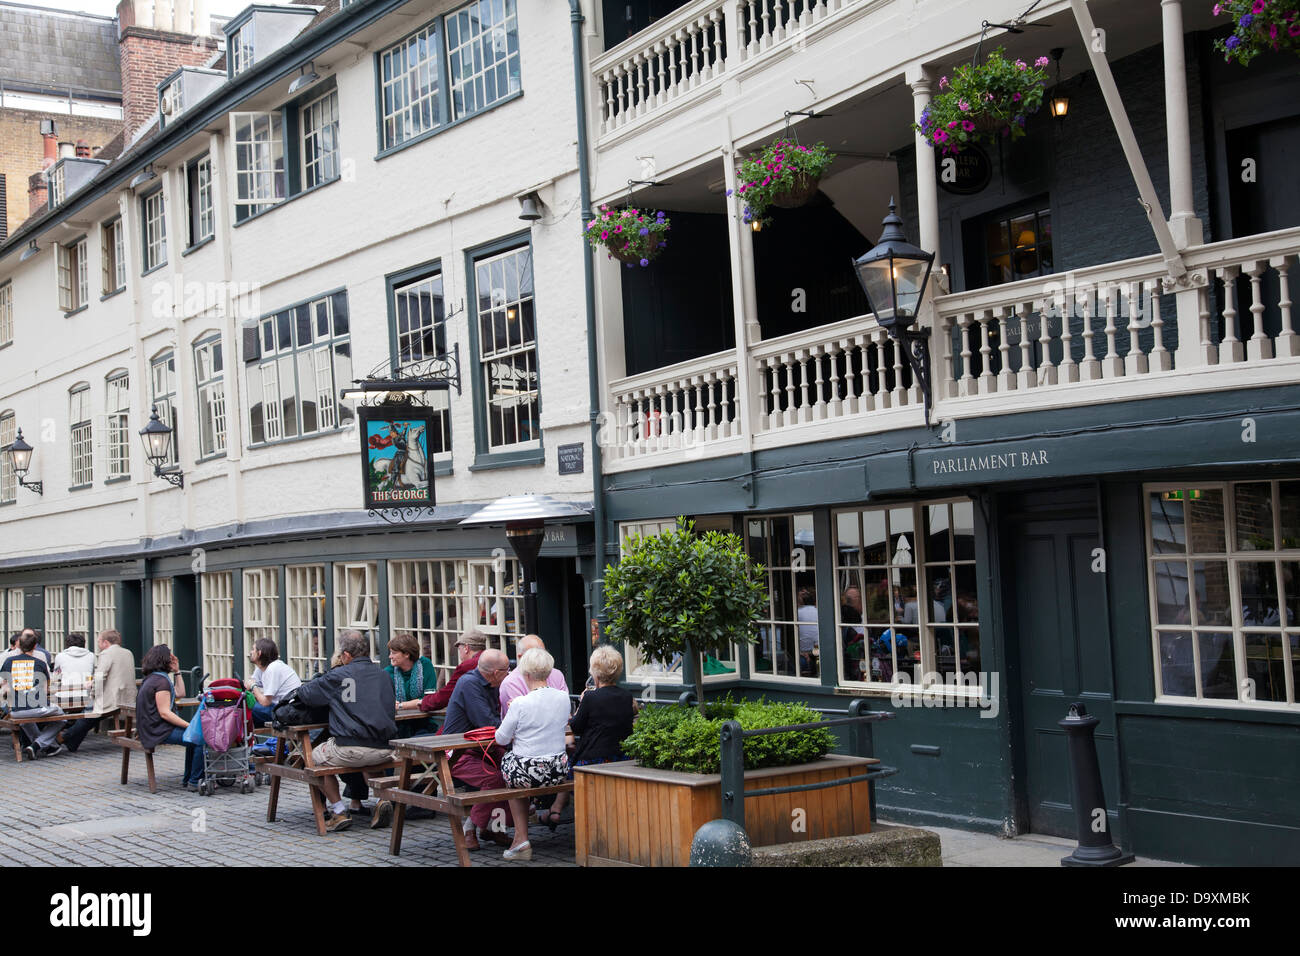 George Inn Pub in Southwark - London UK Stock Photo